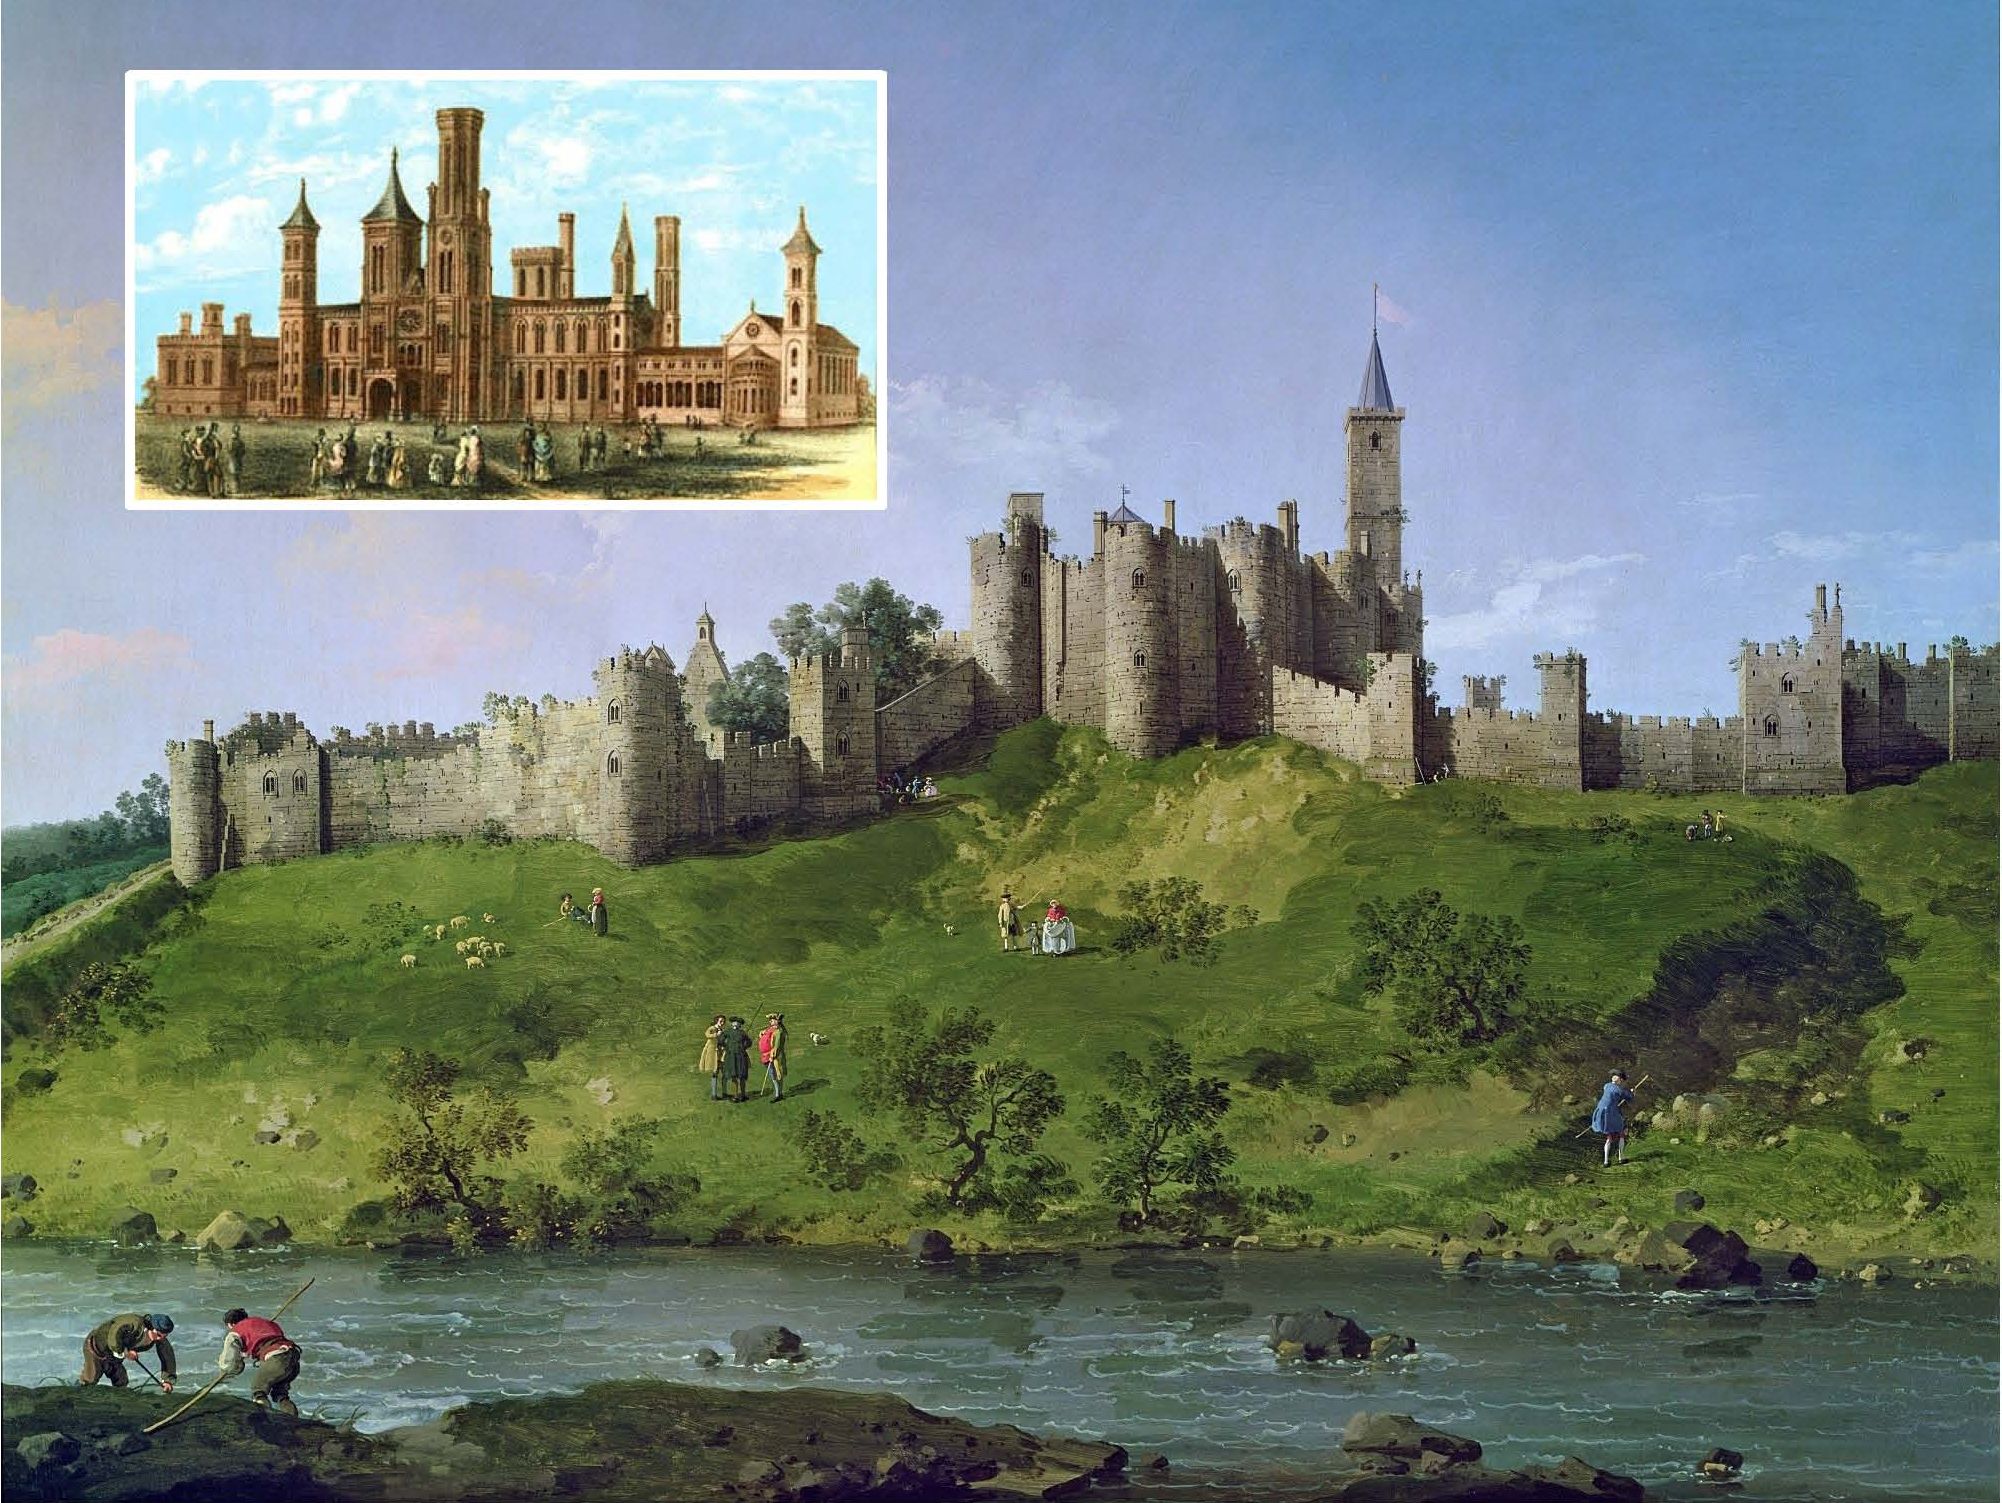 Alnwick Castle by Caneletto